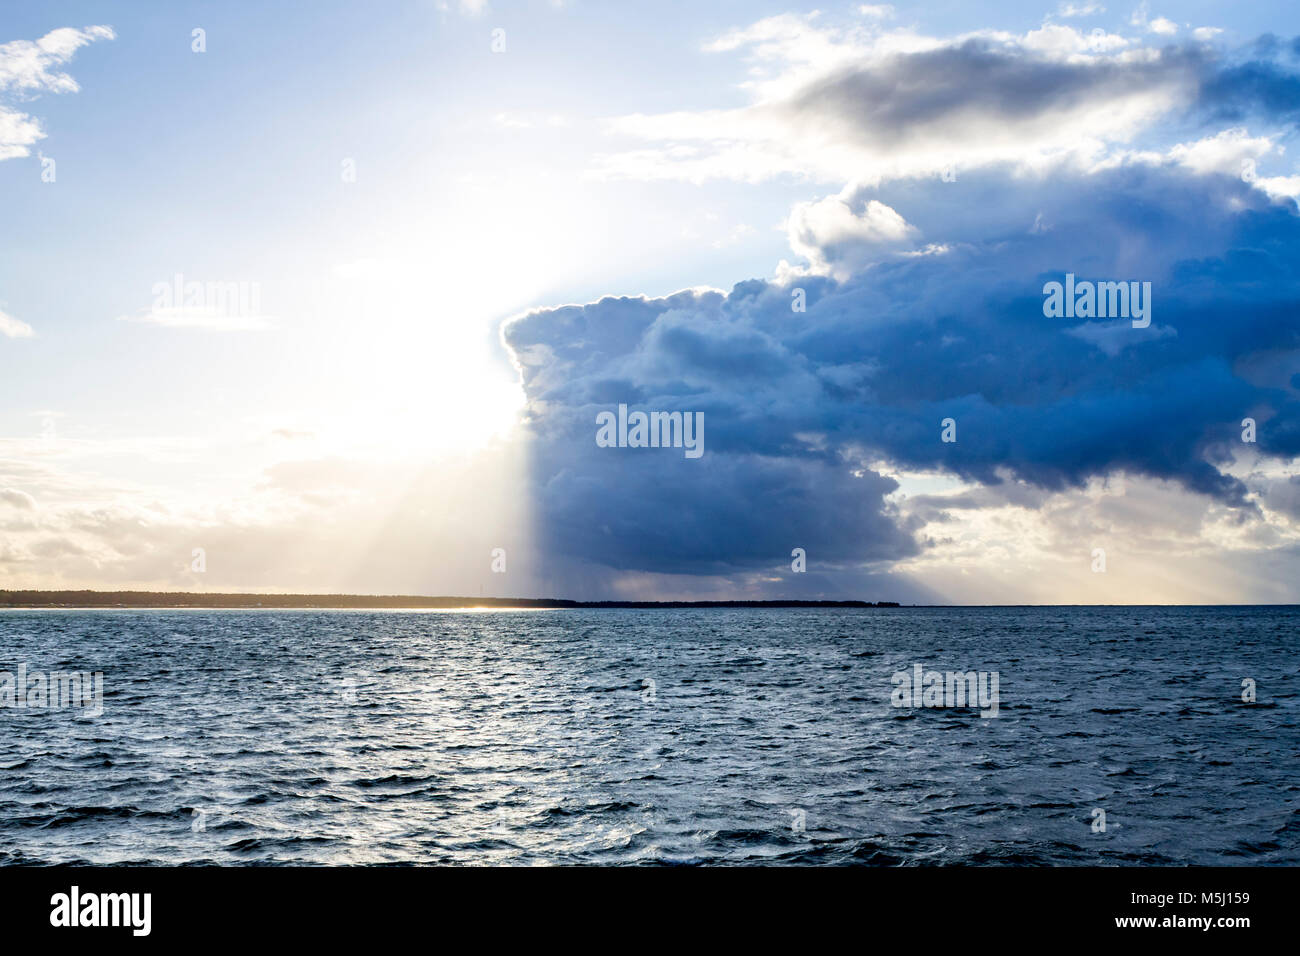 Germania, Meclemburgo-Pomerania, Prerow, Mar Baltico, nuvole e sole Foto Stock